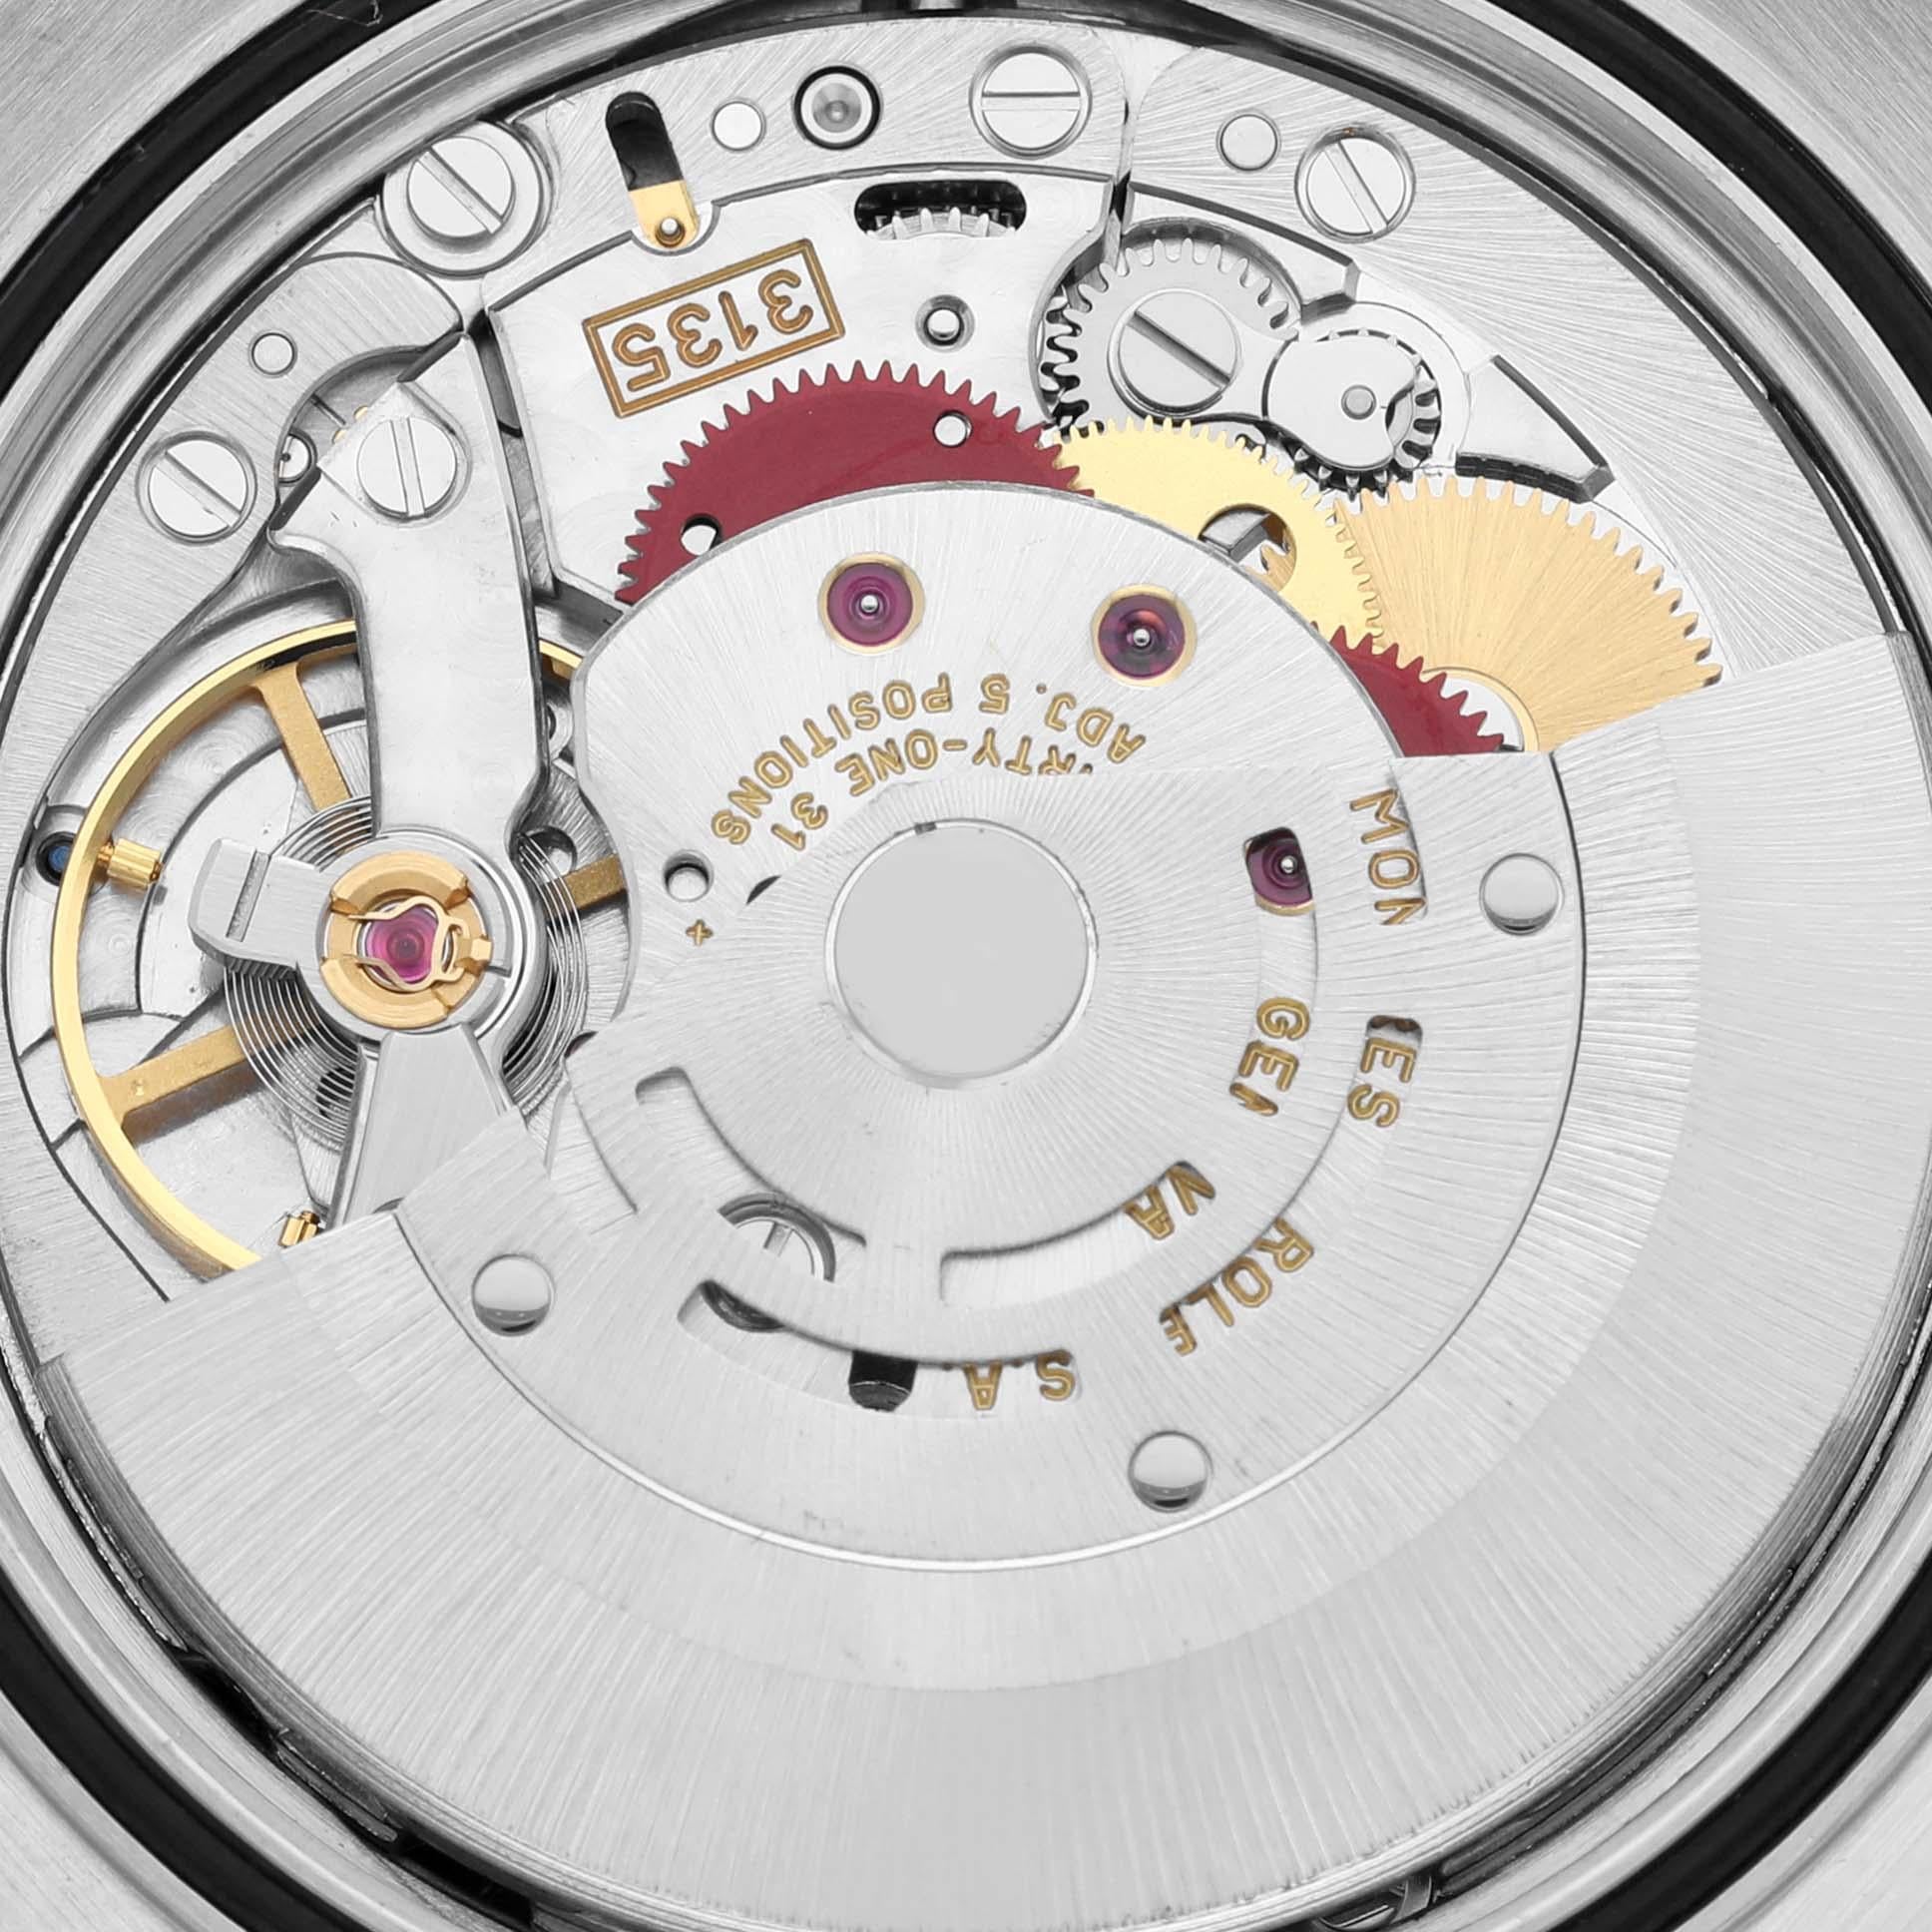 Men's Rolex Datejust 36 Steel Yellow Gold Black Dial Mens Watch 16233